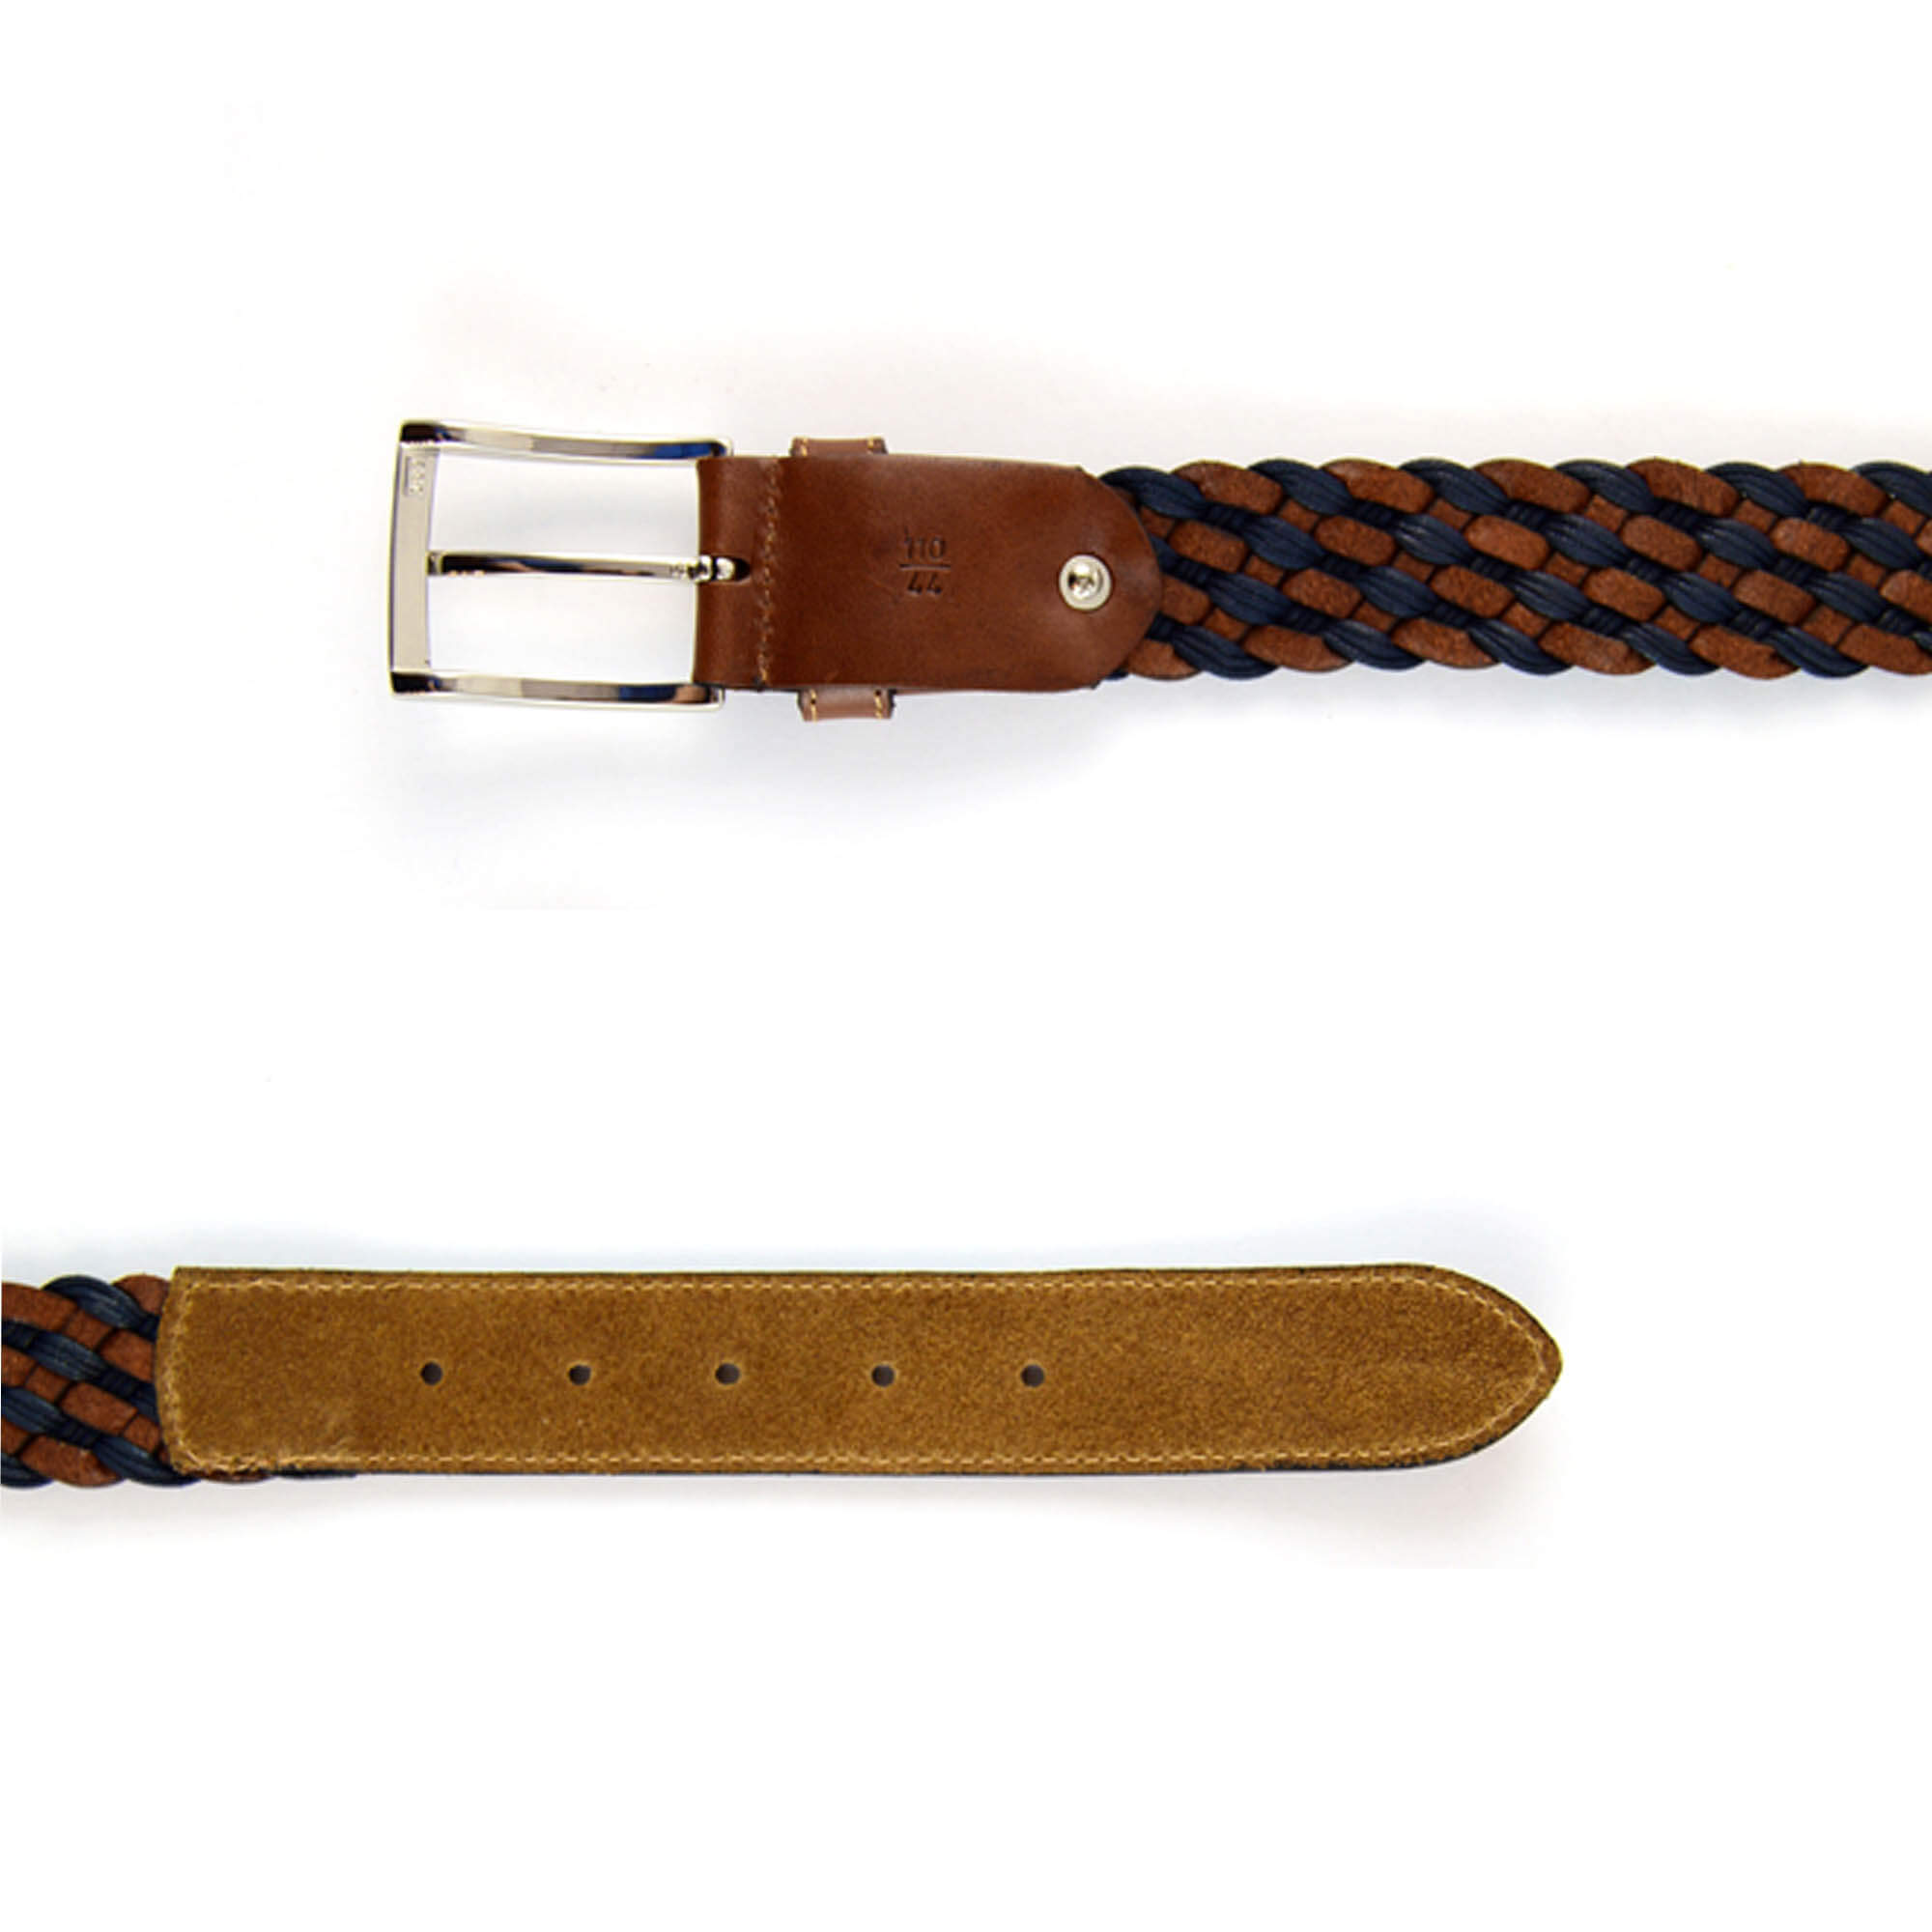 Buy Woven Leather Golf Belt - Brown Navy Blue - LeatherBeltsOnline